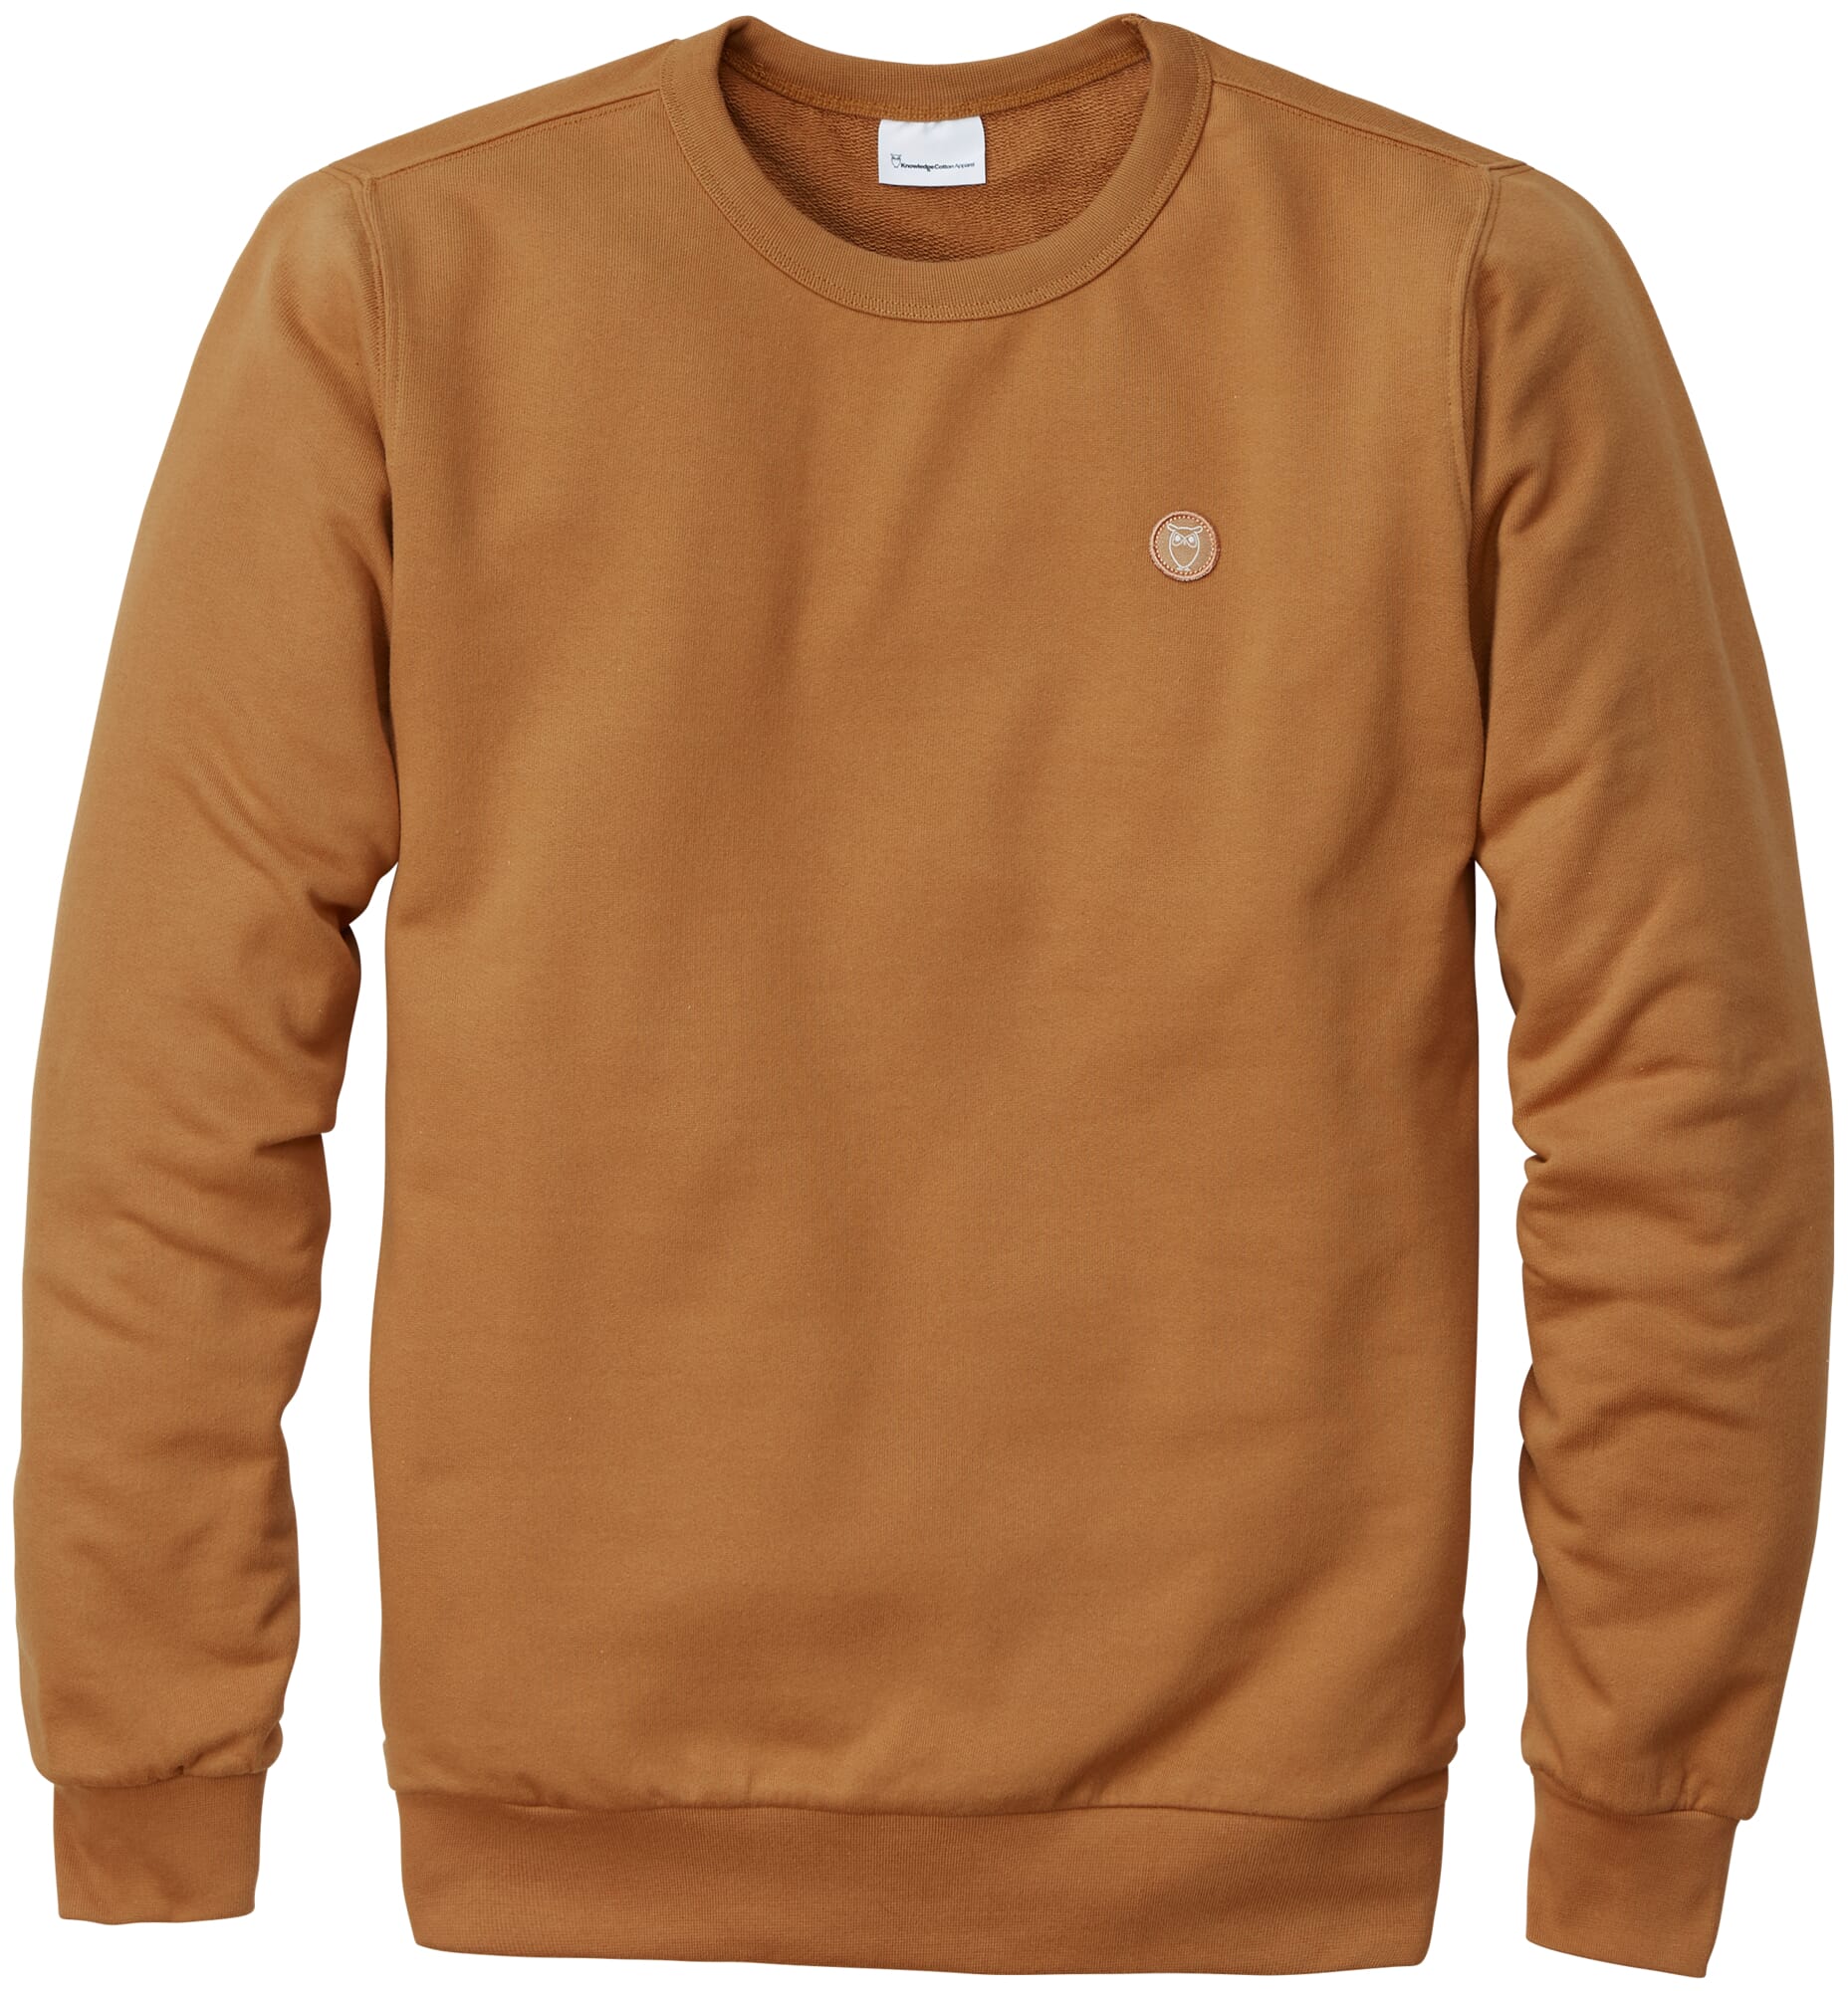 Vreemdeling ethiek warm Heren sweatshirt, Medium bruin | Manufactum